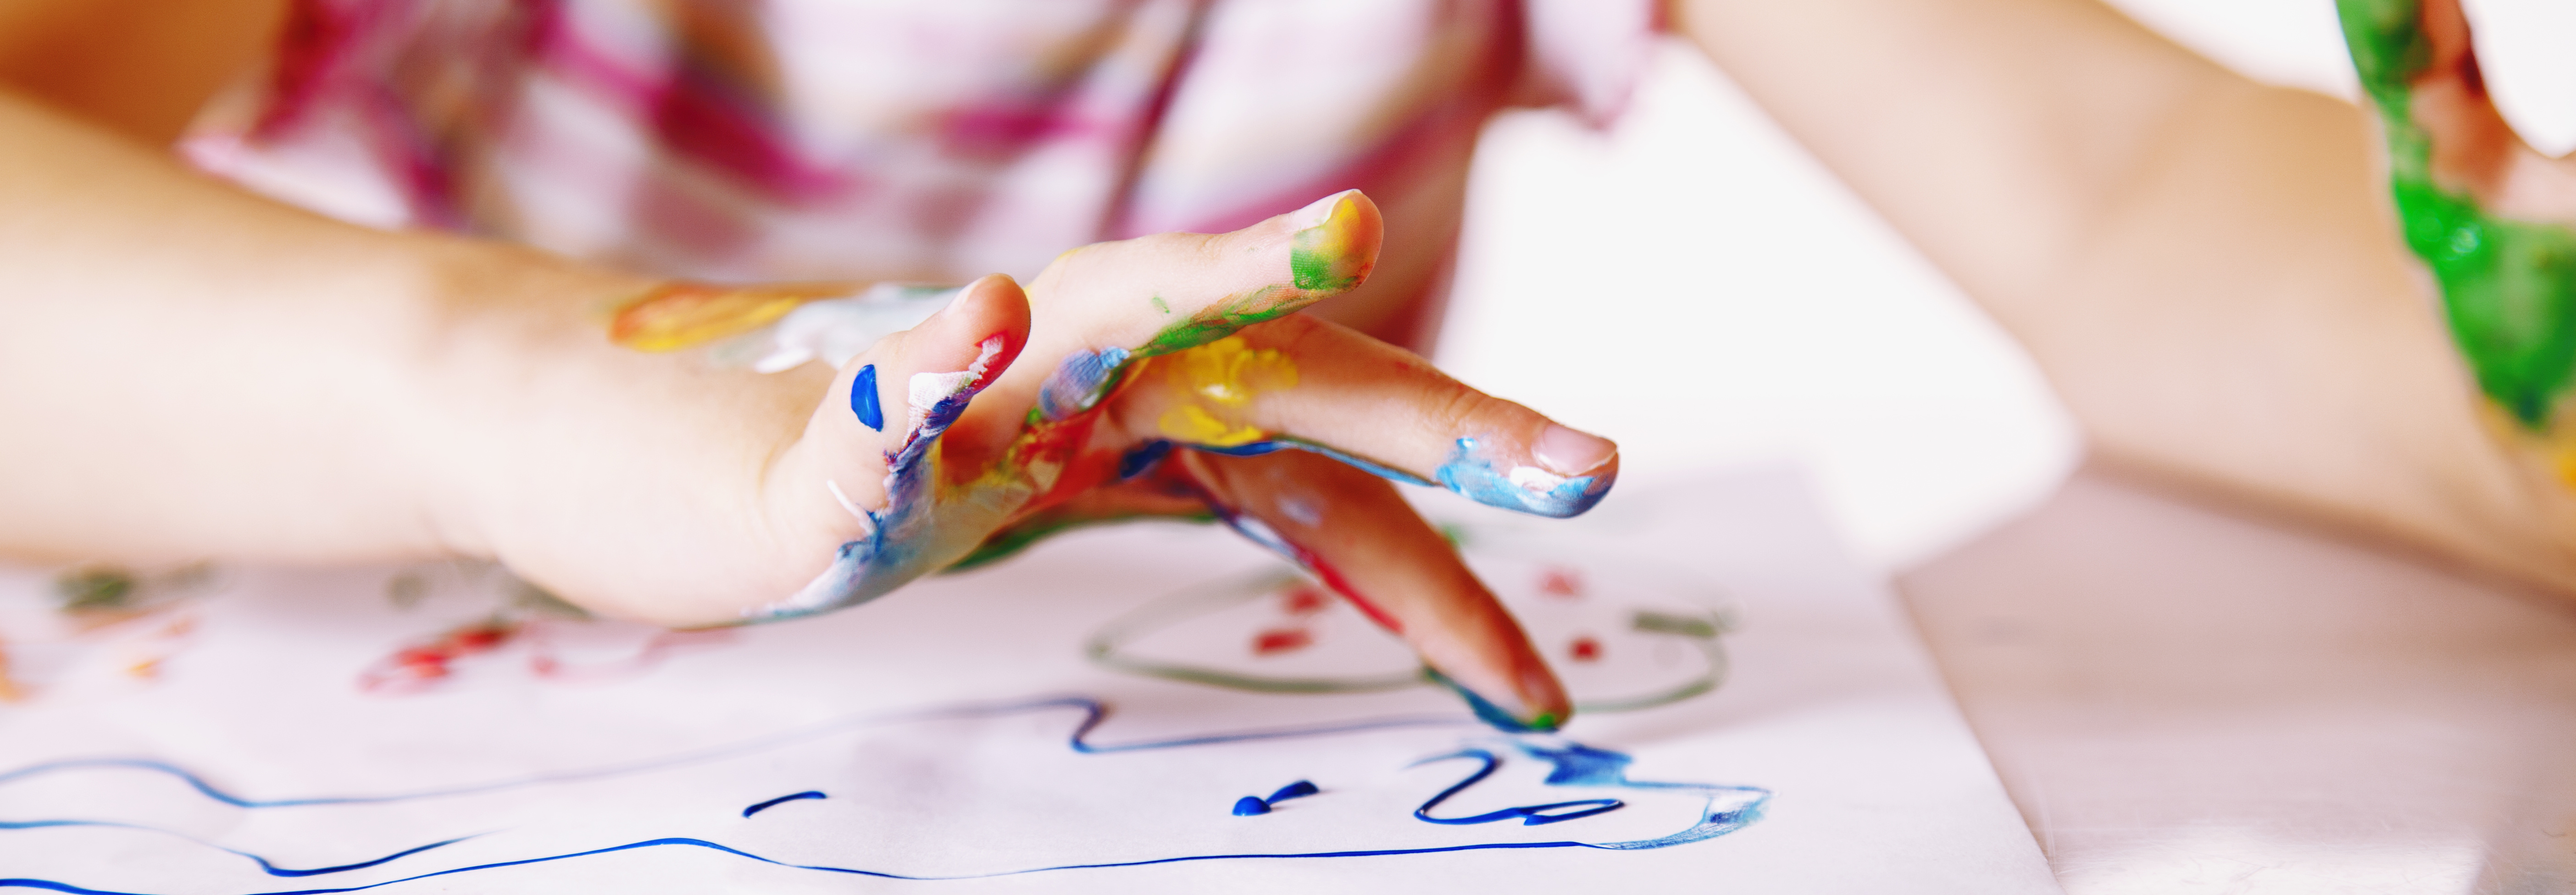 child-finger-painting.jpeg